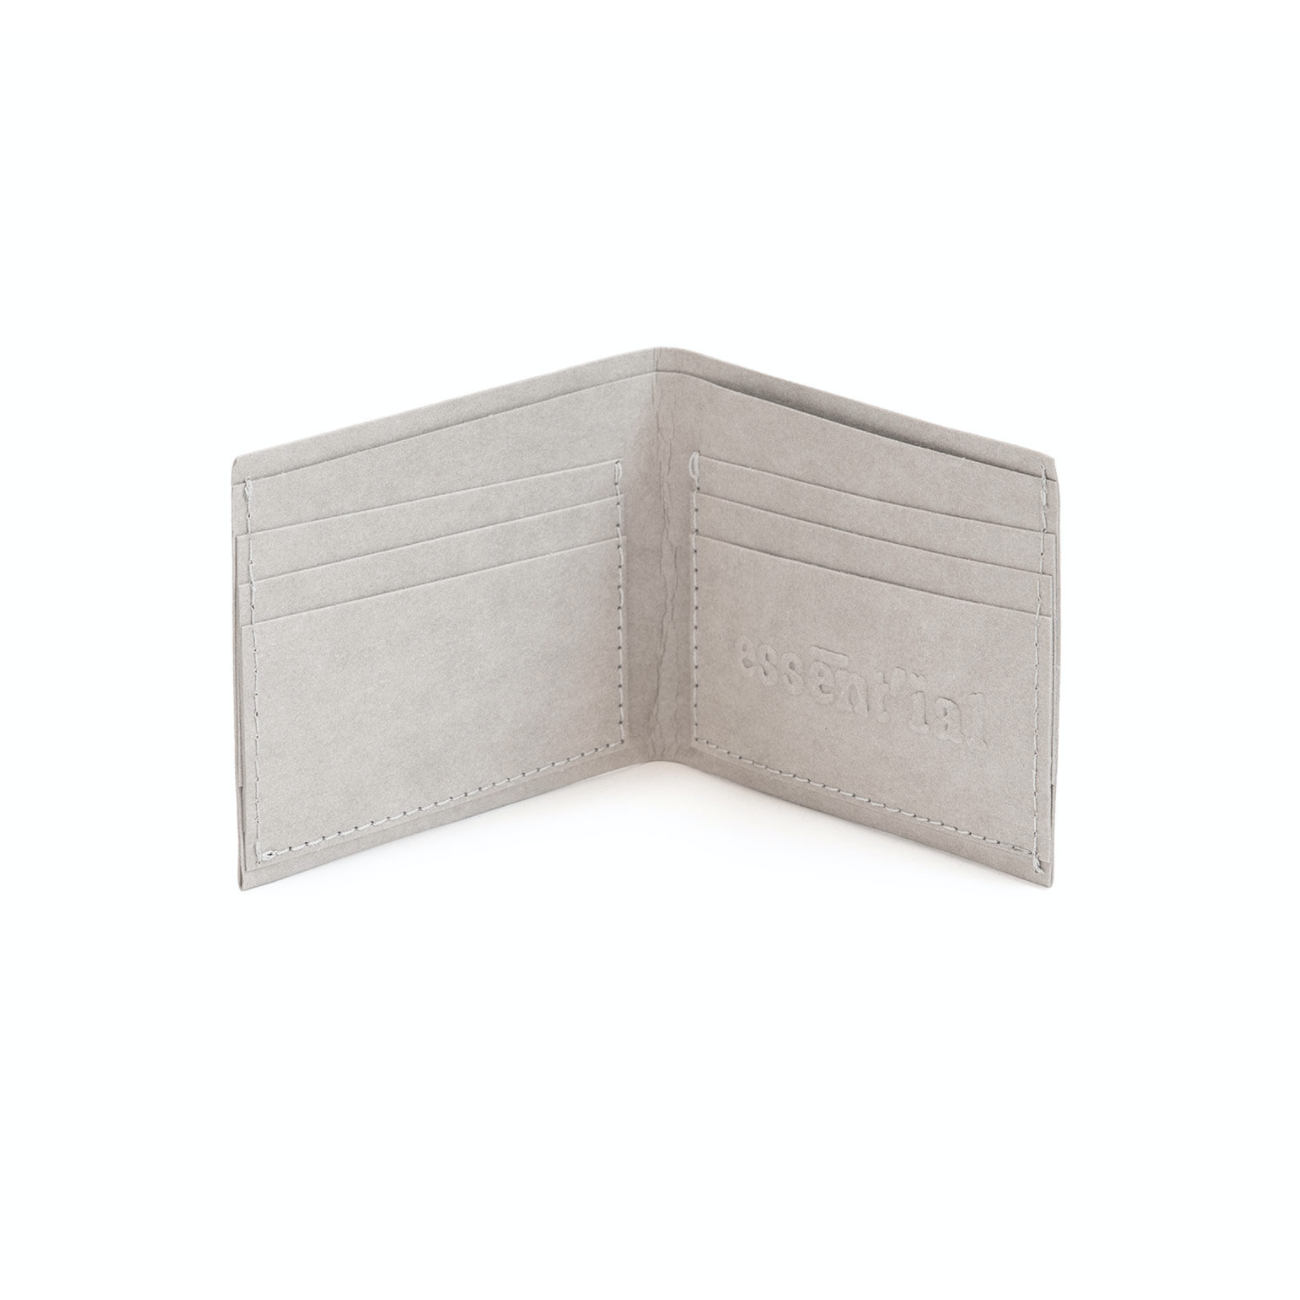 Essent'ial Folding Wallet in Gray